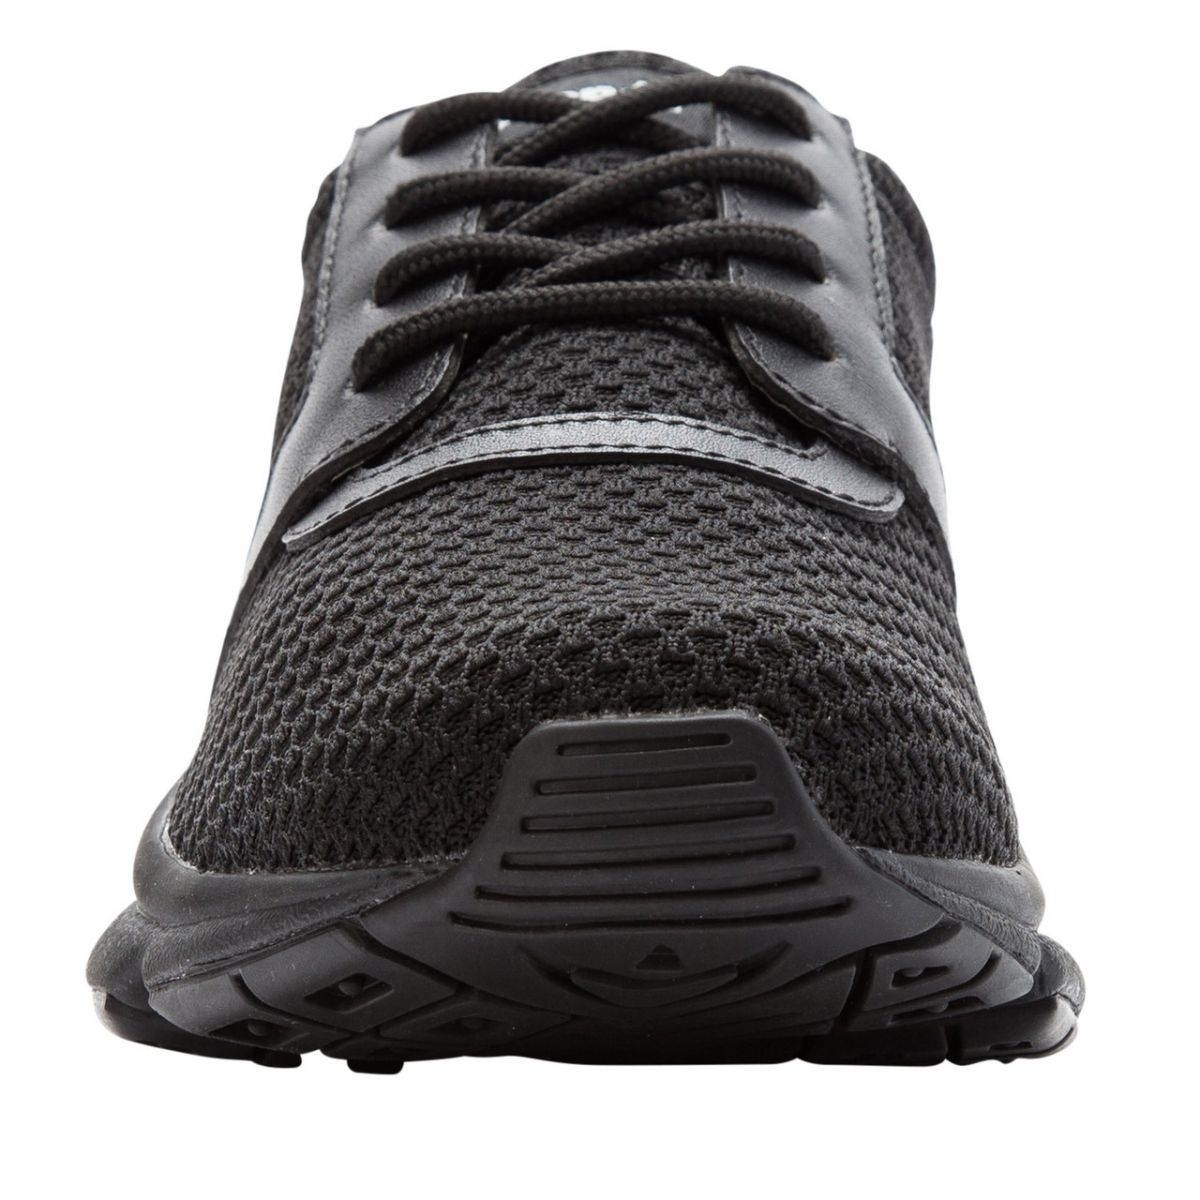 Propet Women's Stability X Walking Shoe Black - WAA032MBLK BLACK - BLACK, 8.5 Narrow